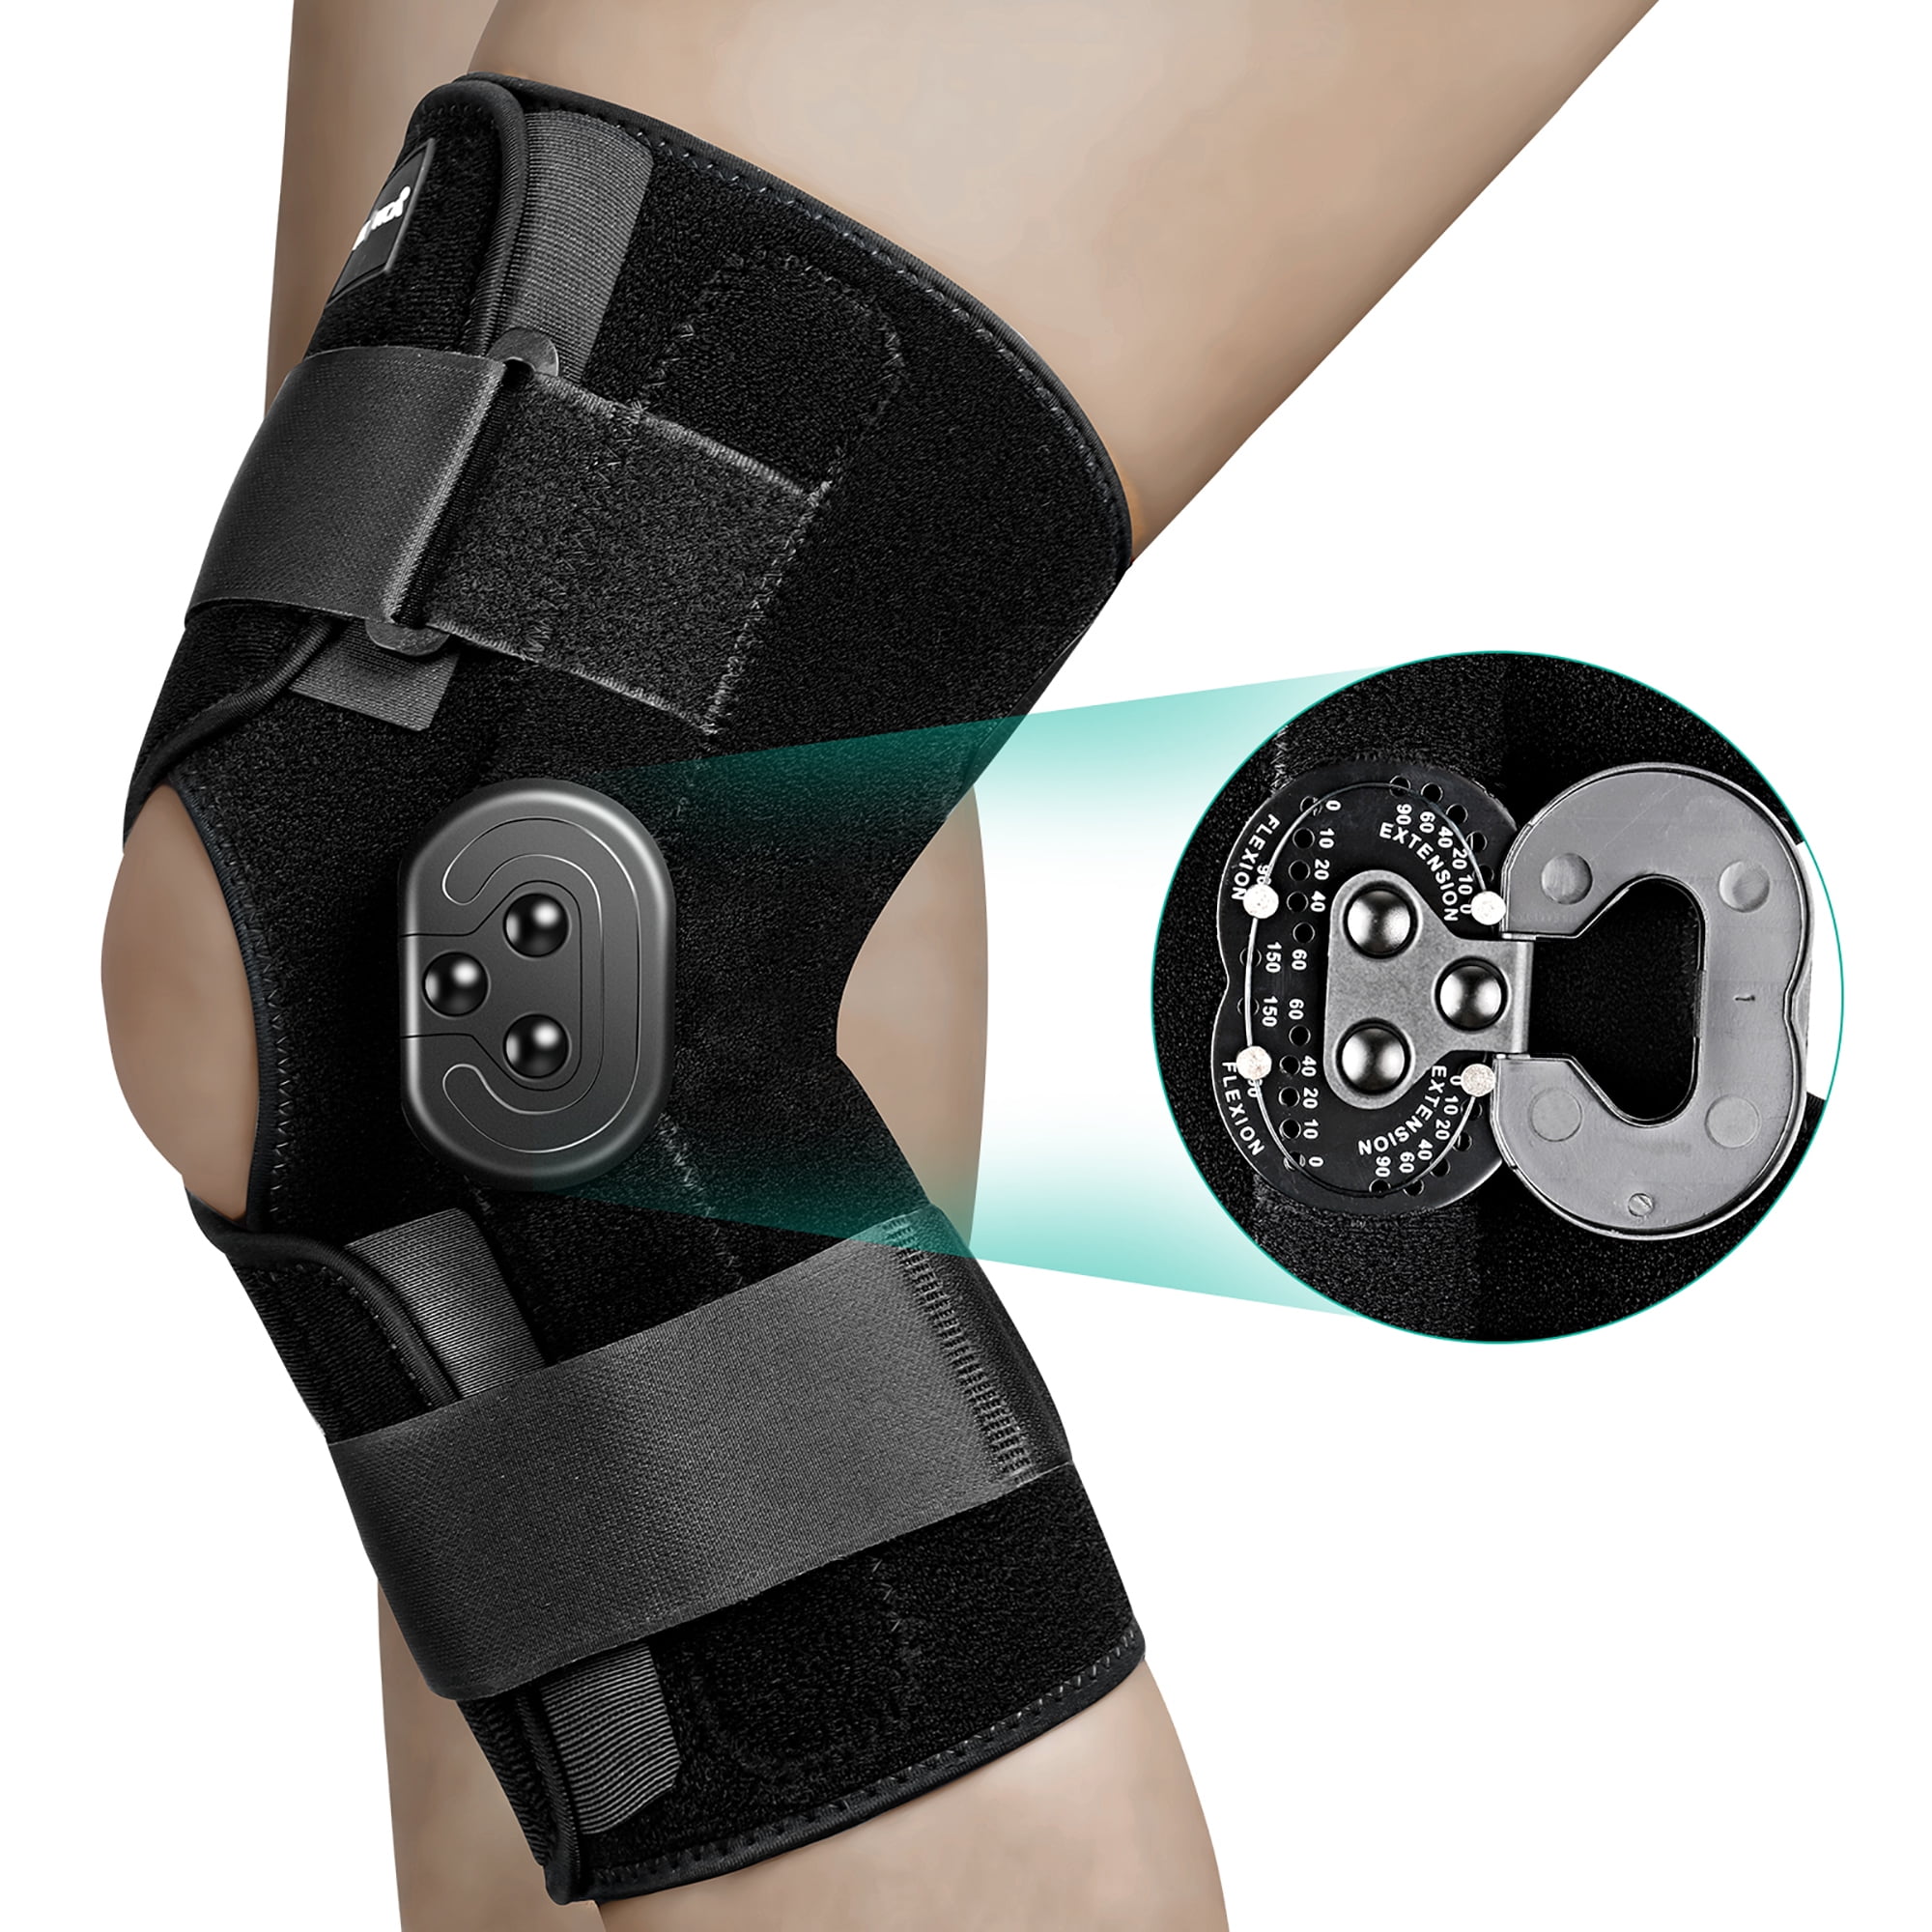 Futuro Sport Adjustable Knee Strap 09189 - Pazzox, pharmacie en ligne